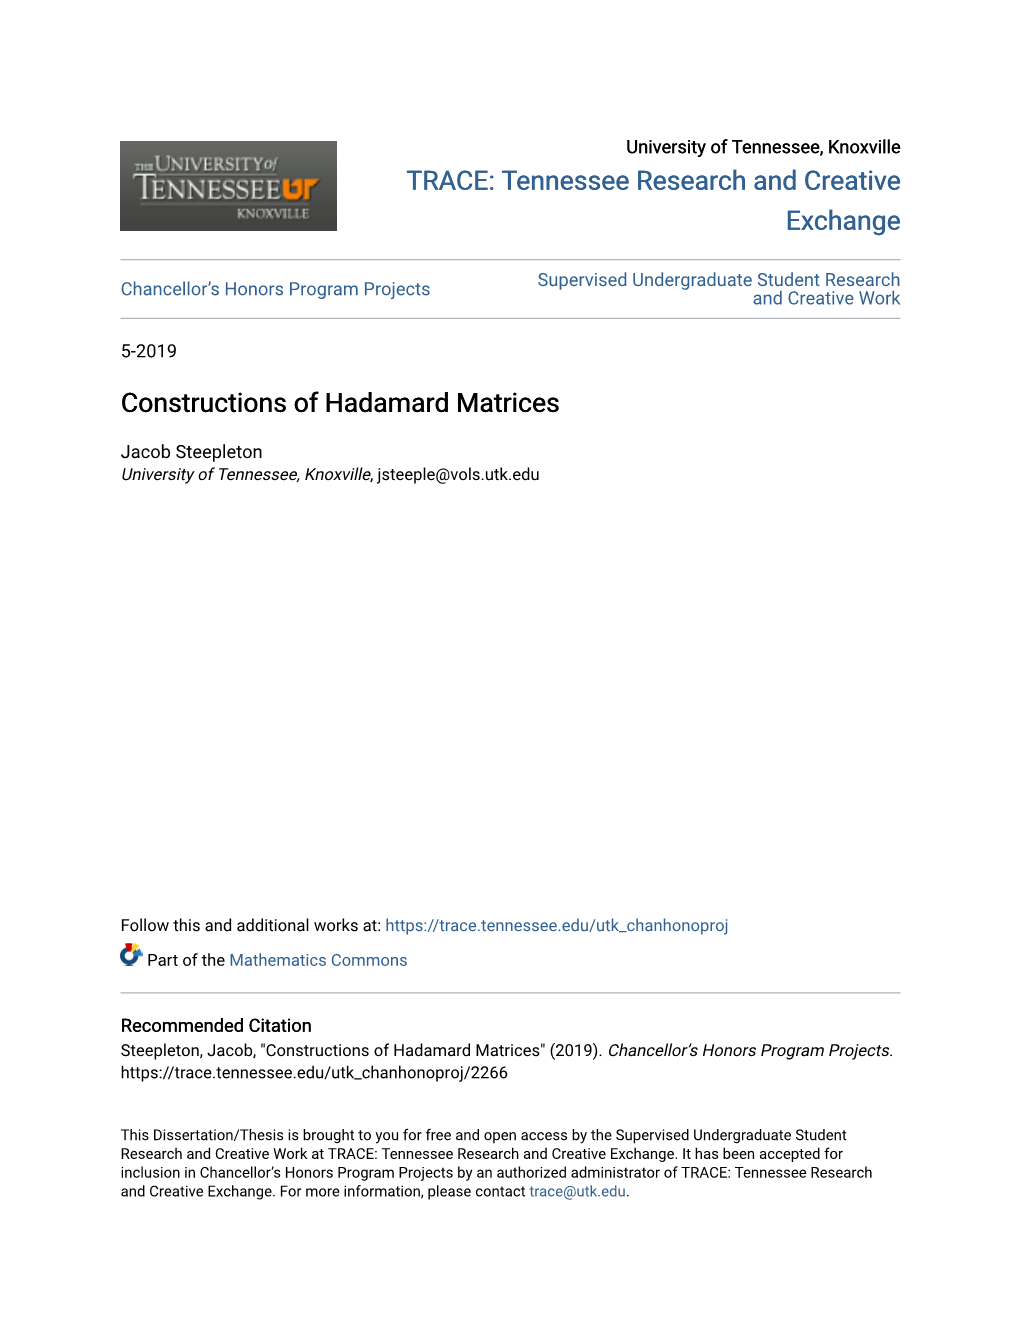 Constructions of Hadamard Matrices